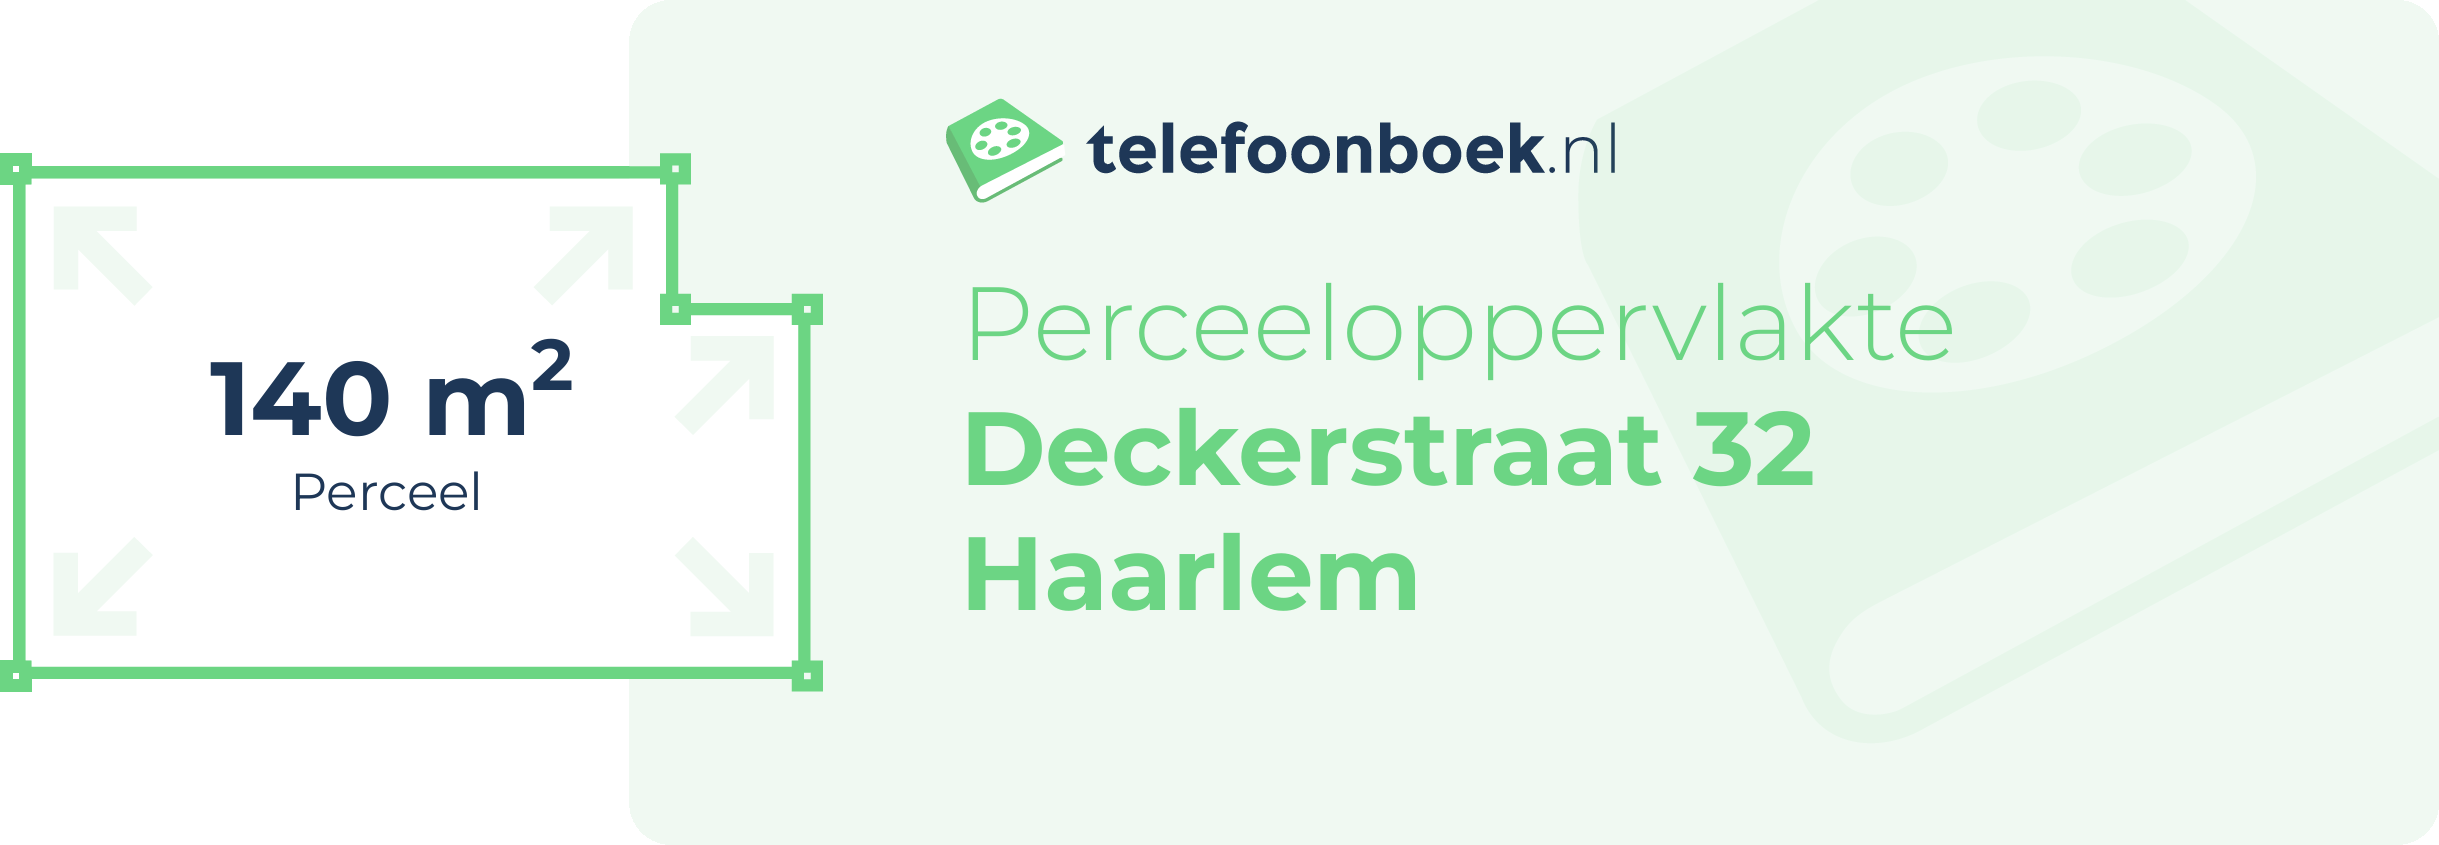 Perceeloppervlakte Deckerstraat 32 Haarlem